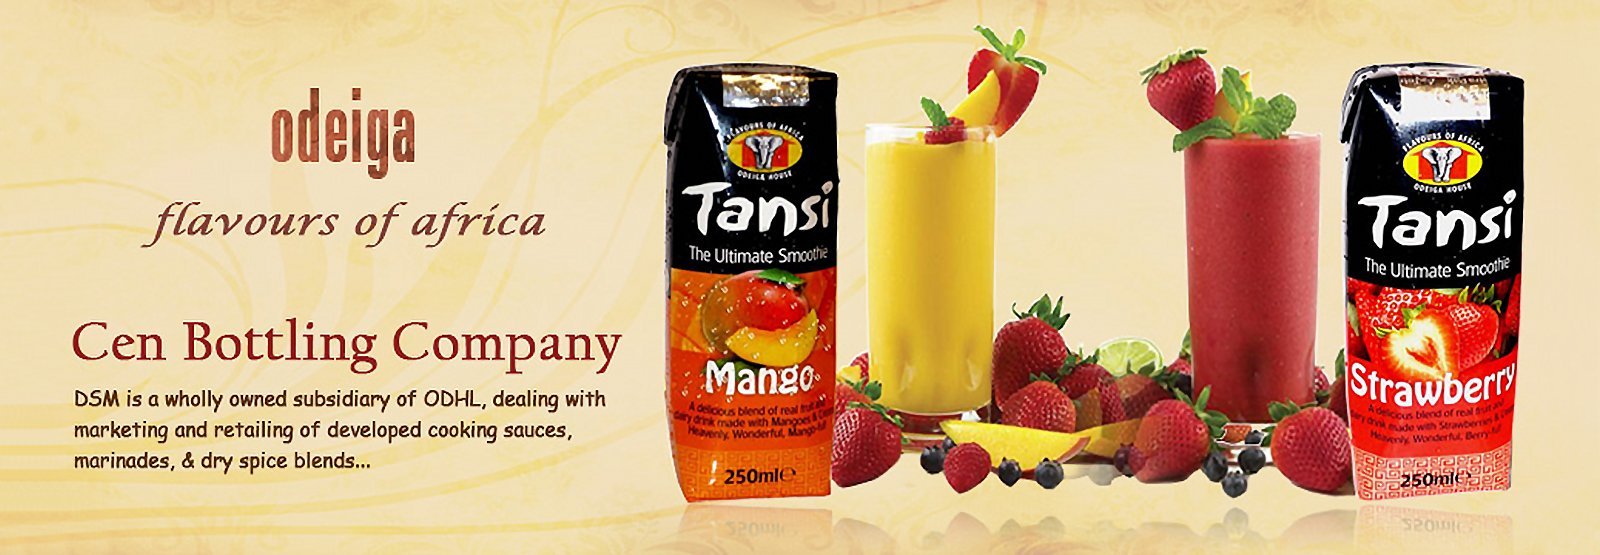 tansi healthy mango smoothie juice